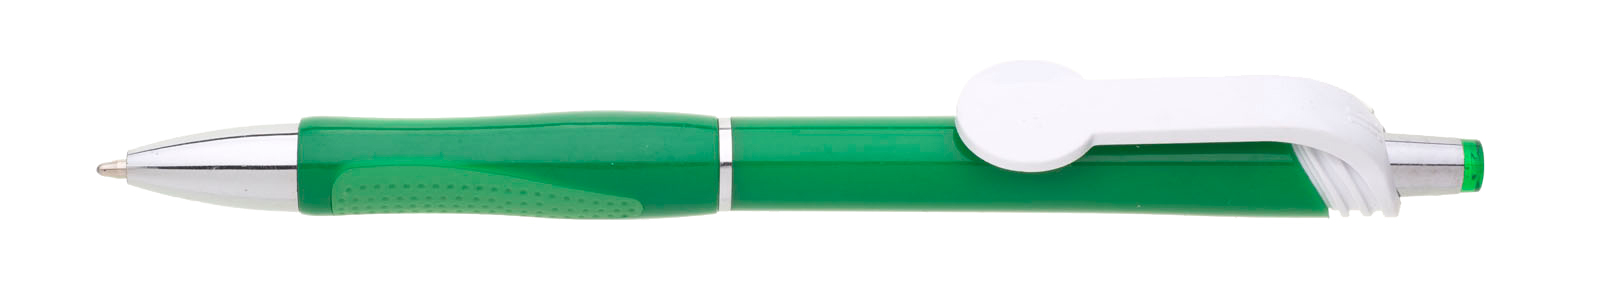 Propiska plast COLO plnobarevná, zelená